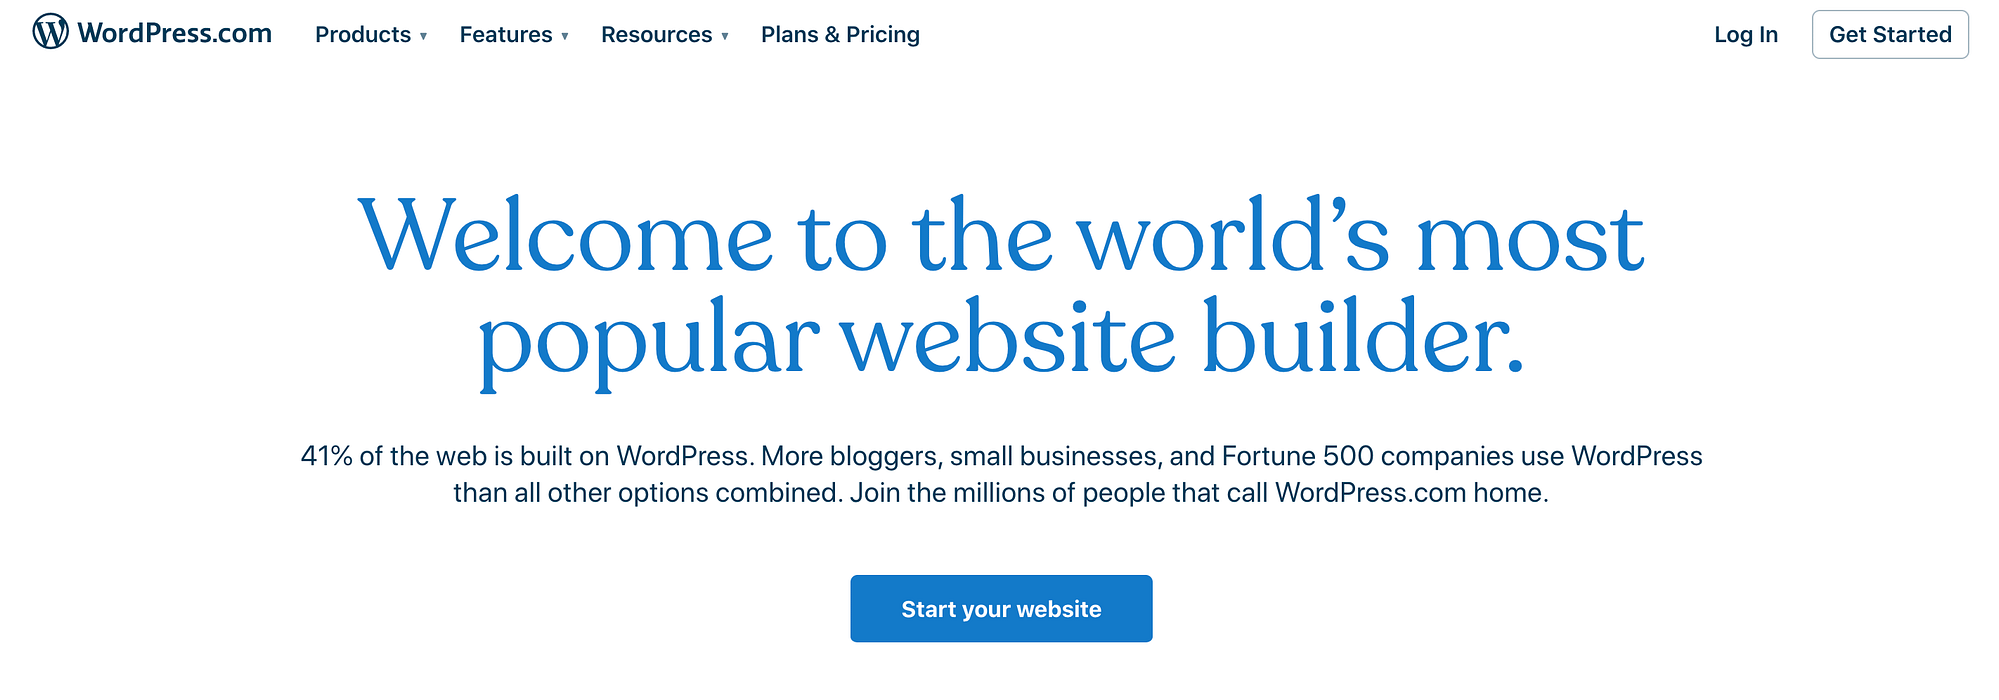 The WordPress.com website builder.